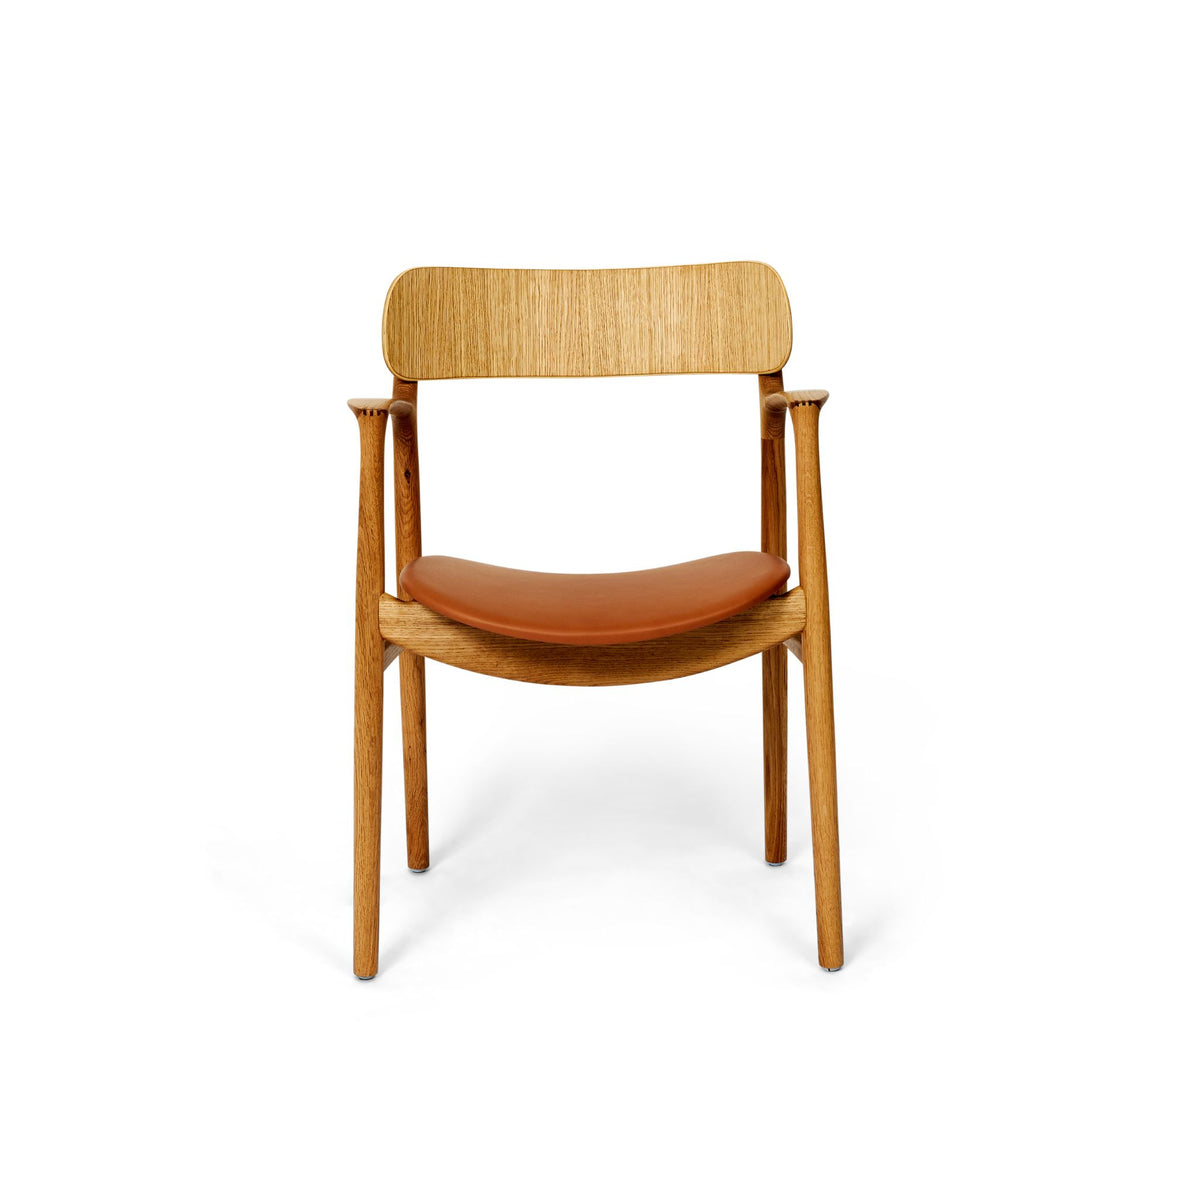 Bent Hansen Asger Dining Chair, Upholstered Seat